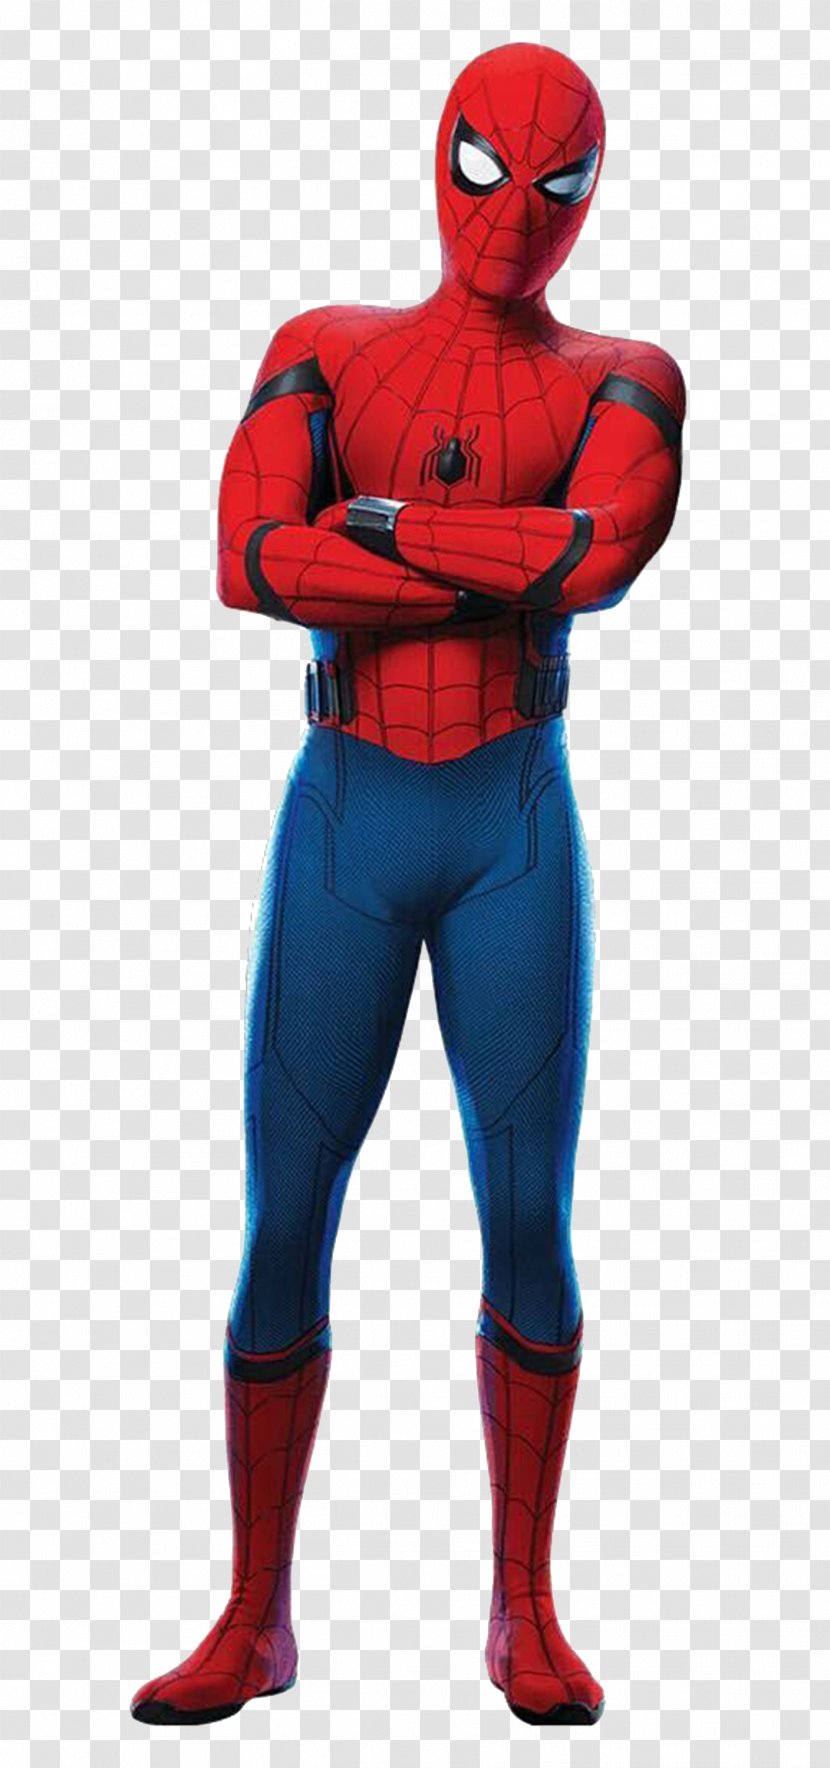 Spider-Man: Homecoming Film Series Hoodie Marvel Cinematic Universe Costume - Tom Holland - Spider-man Transparent PNG